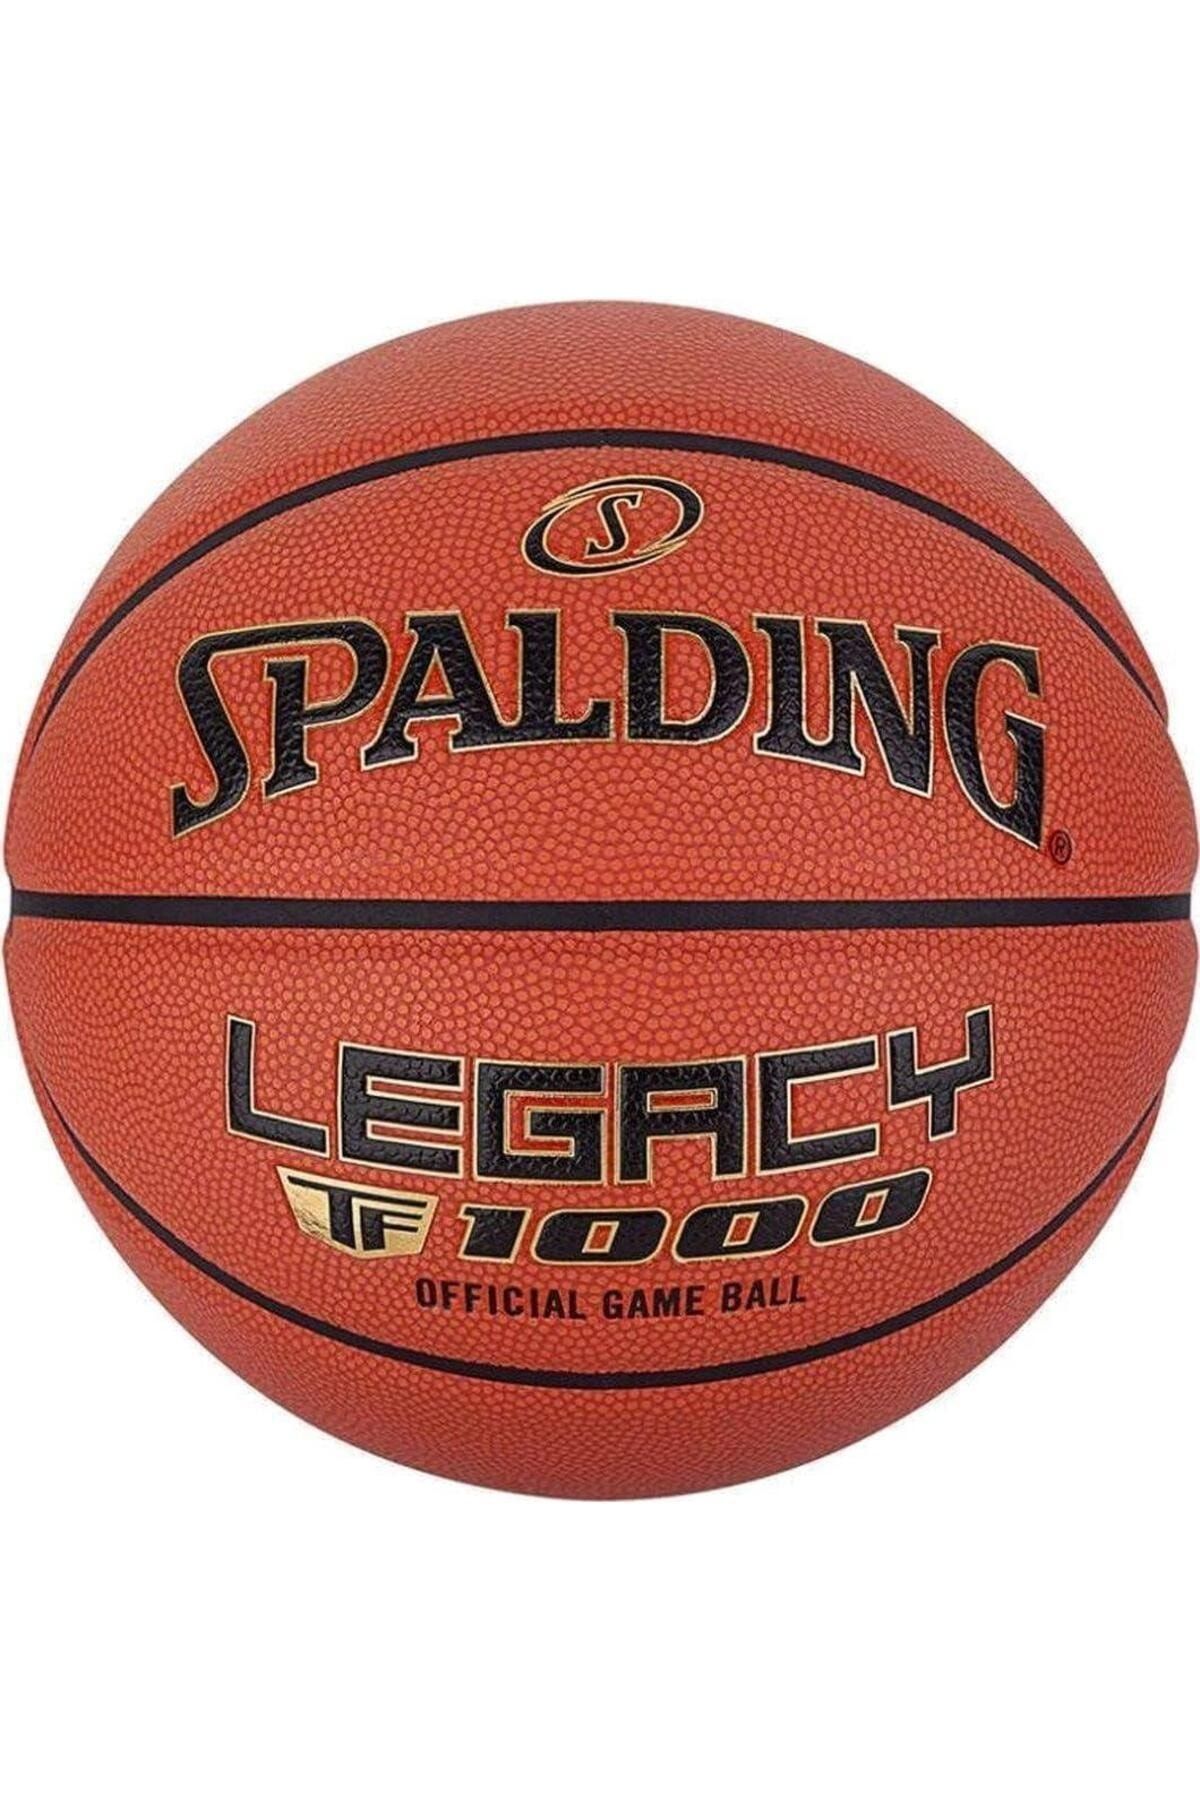 Spalding Basketbol Topu TF-1000 LEGACY FIBA Size:7 76963Z